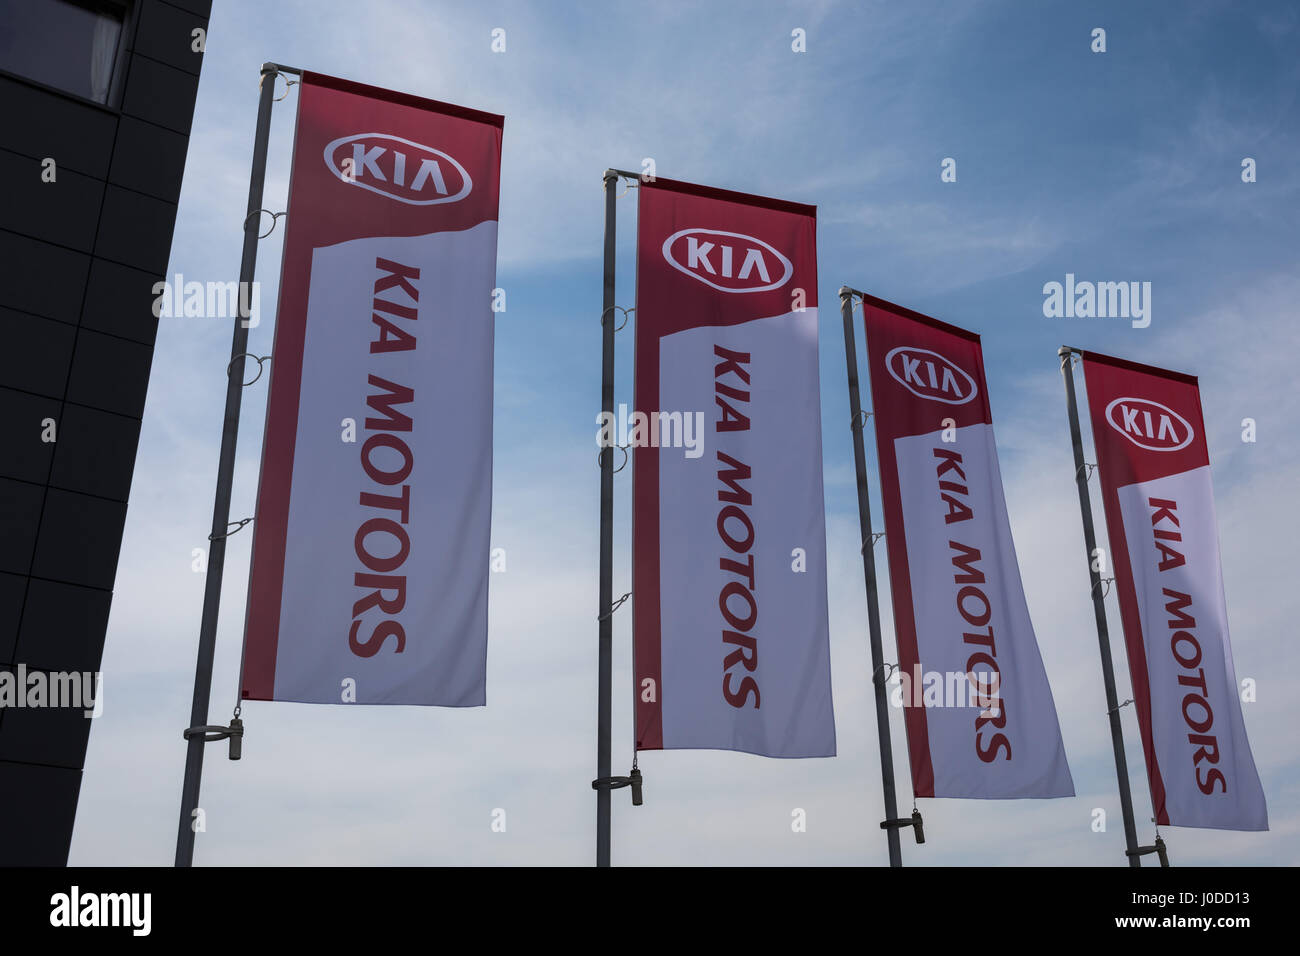 Kia Motors logo on flags Stock Photo